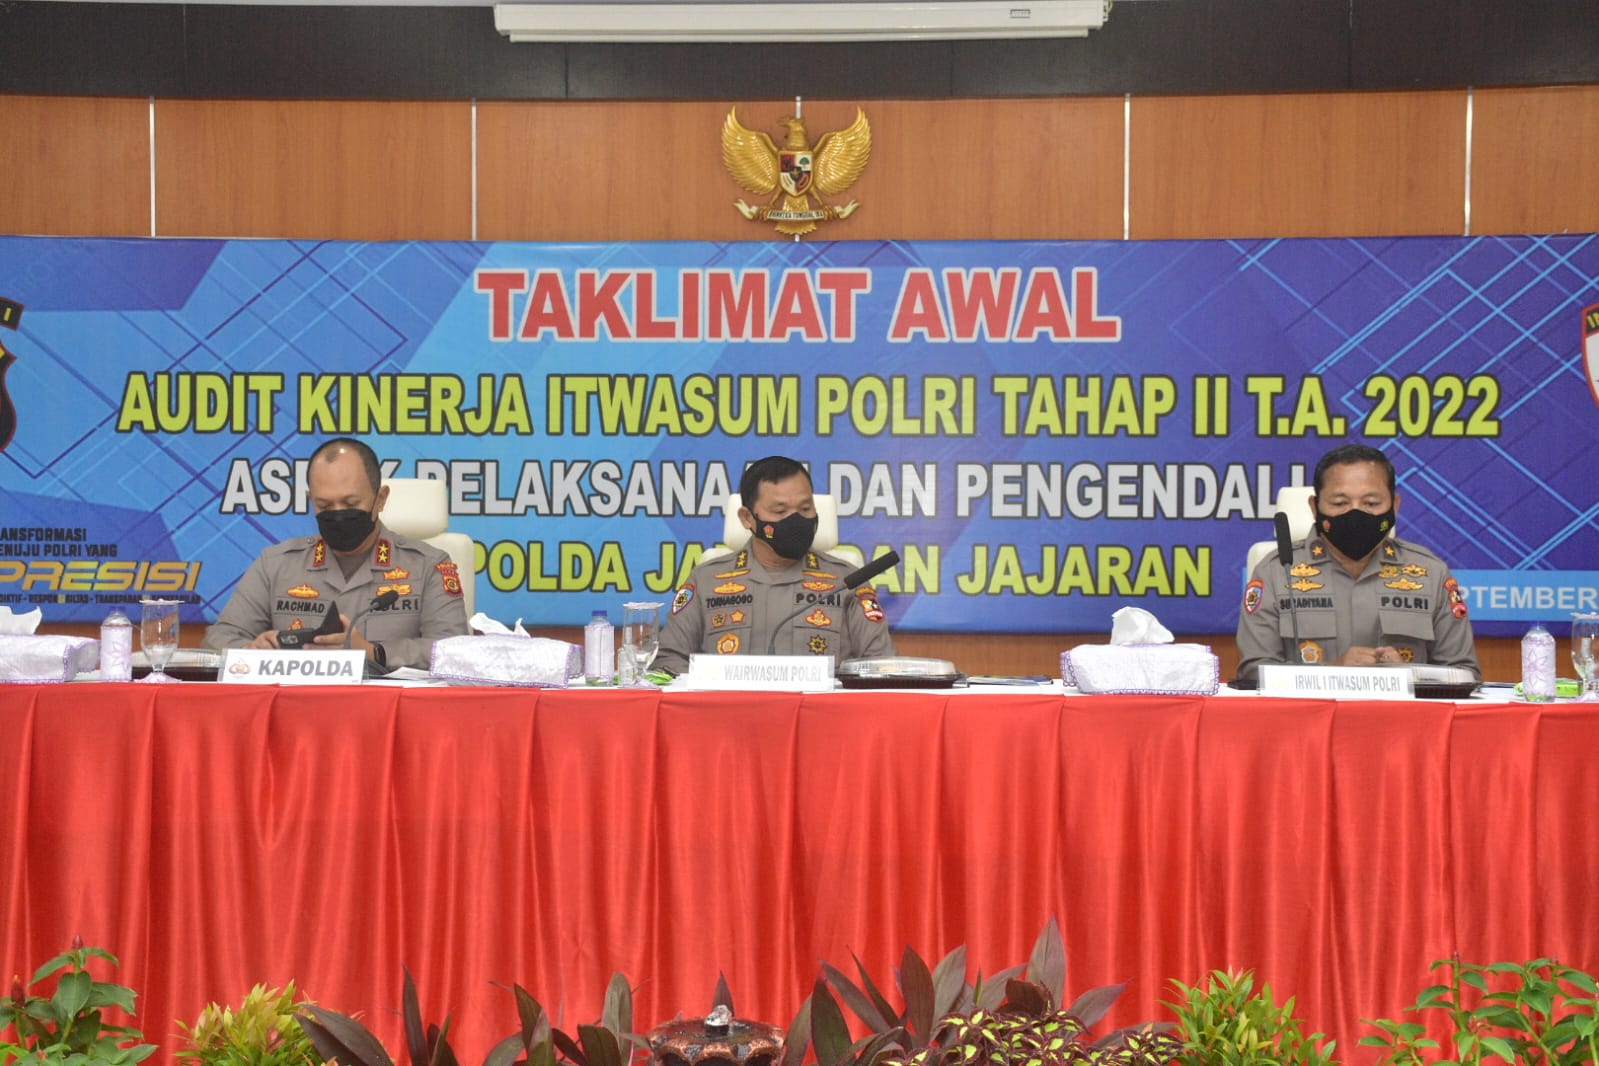 Kapolda Jambi Buka Pelaksanaan Audit Kinerja Itwasum Polri Tahap II TA 2022